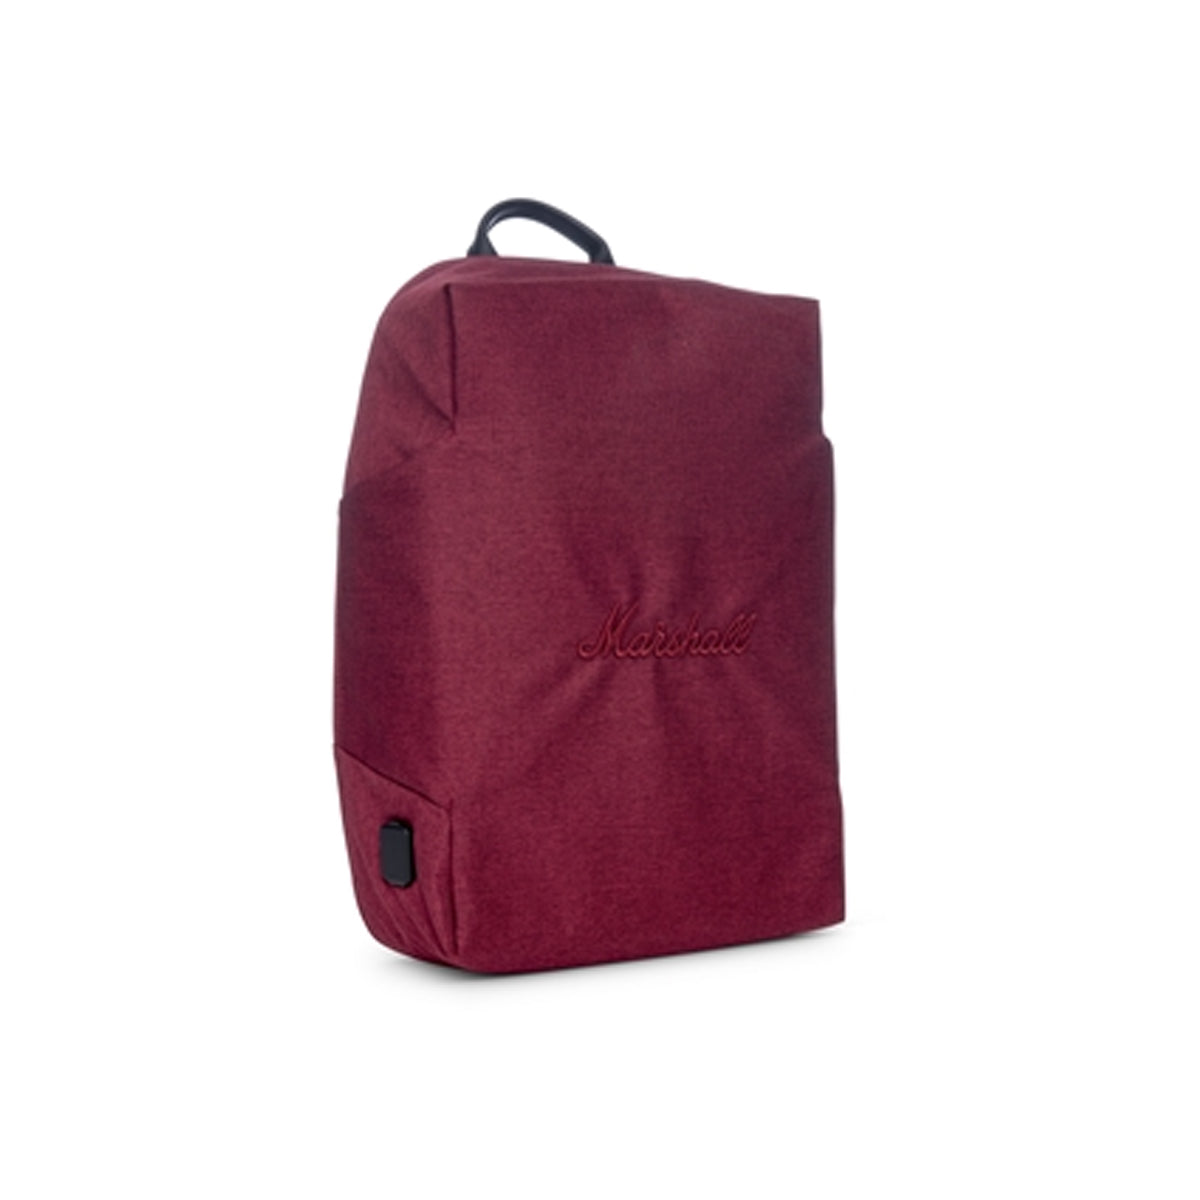 Marshall City Rocker Backpack Carry Bag - Crimson - ACCS-00212